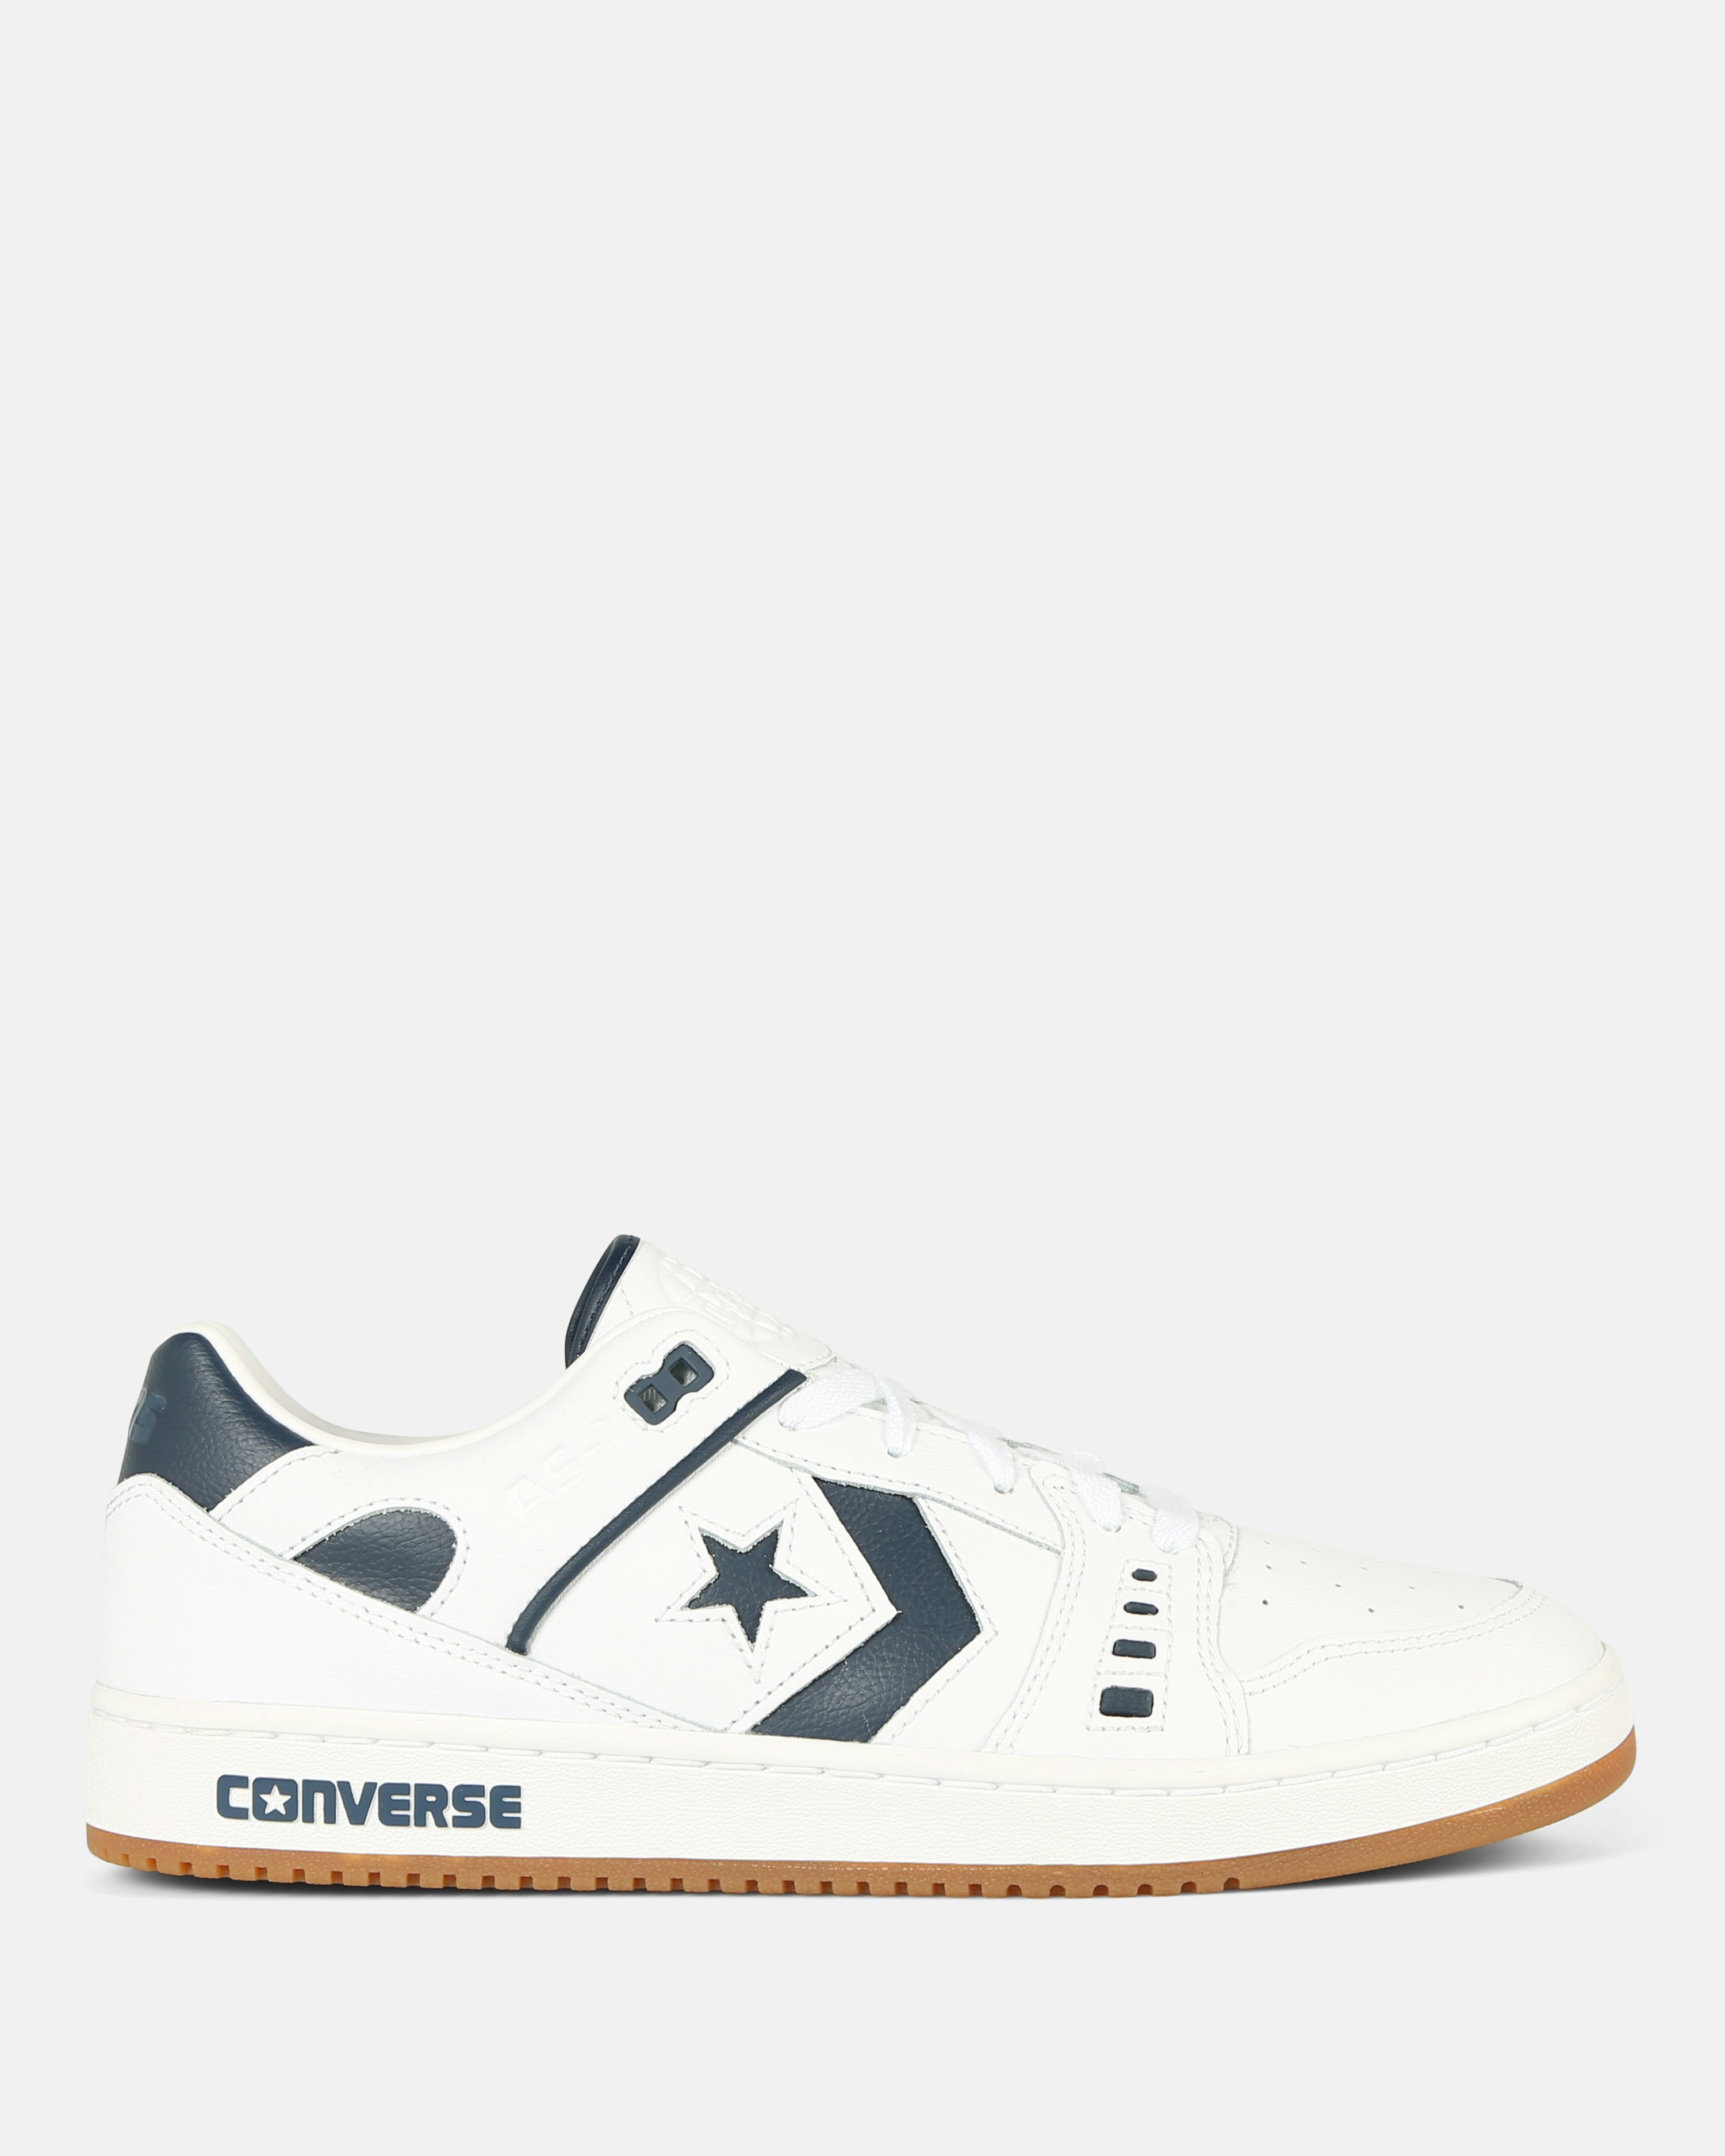 Converse Skateboarding CONS AS-1 Pro skate shoes White | Unisex